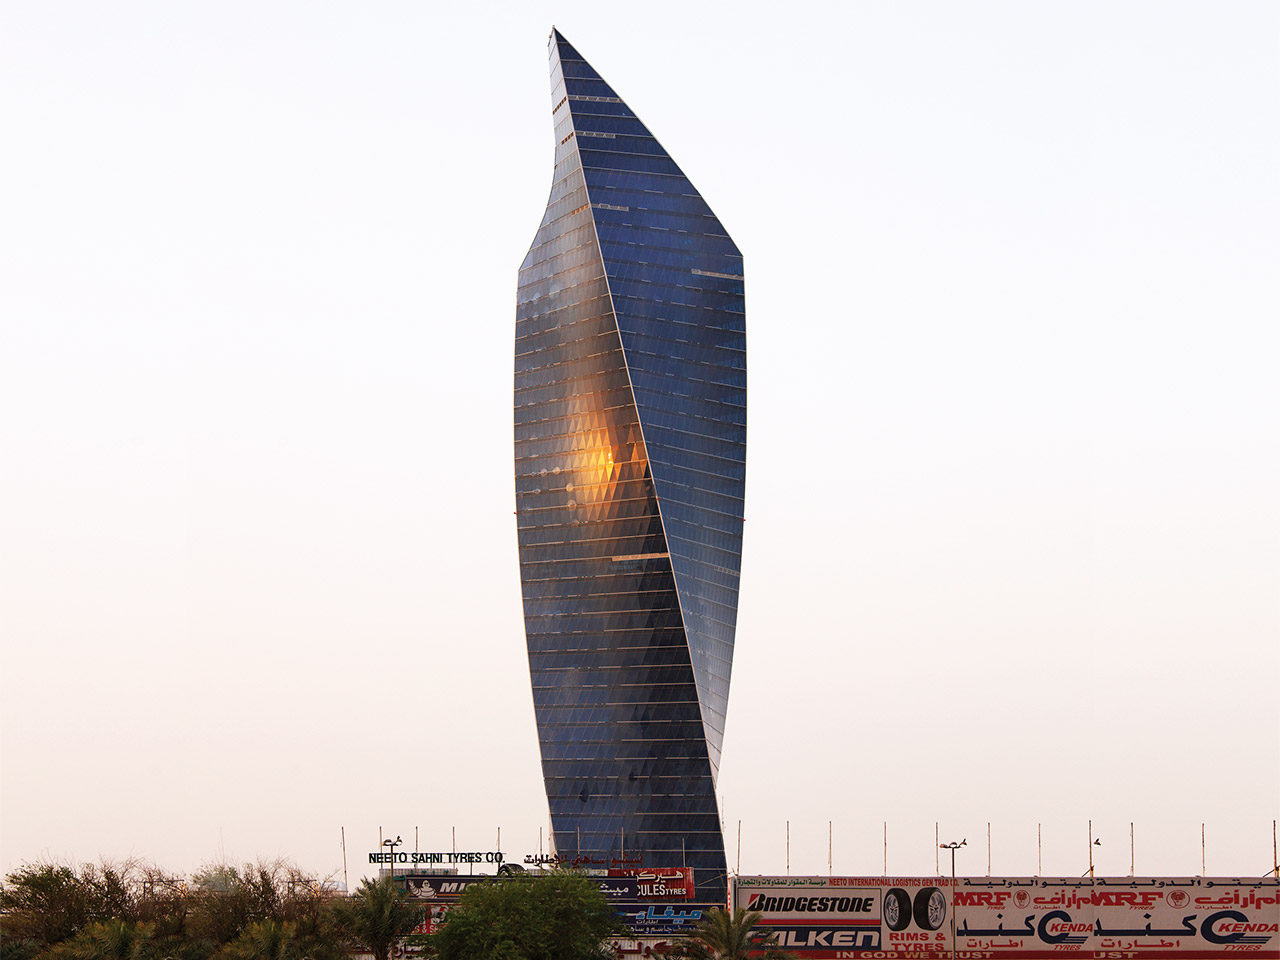 Al-Tijaria Tower